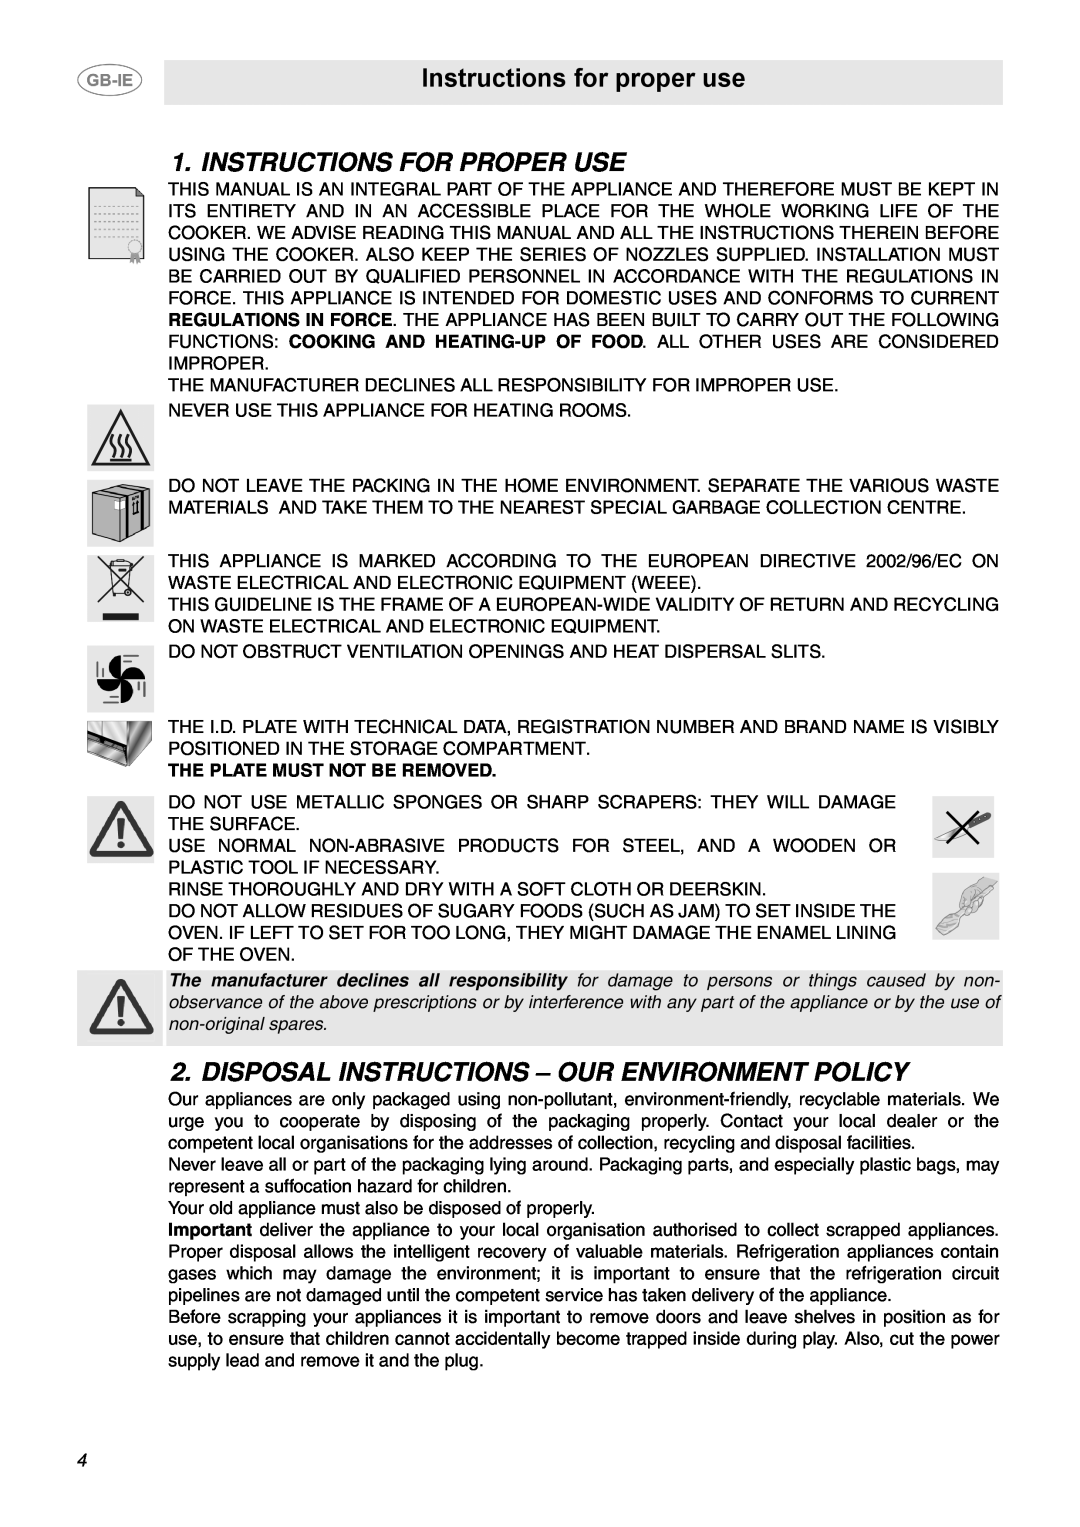 Smeg CC92MFX5 Instructions for proper use, Instructions For Proper Use, Disposal Instructions - Our Environment Policy 